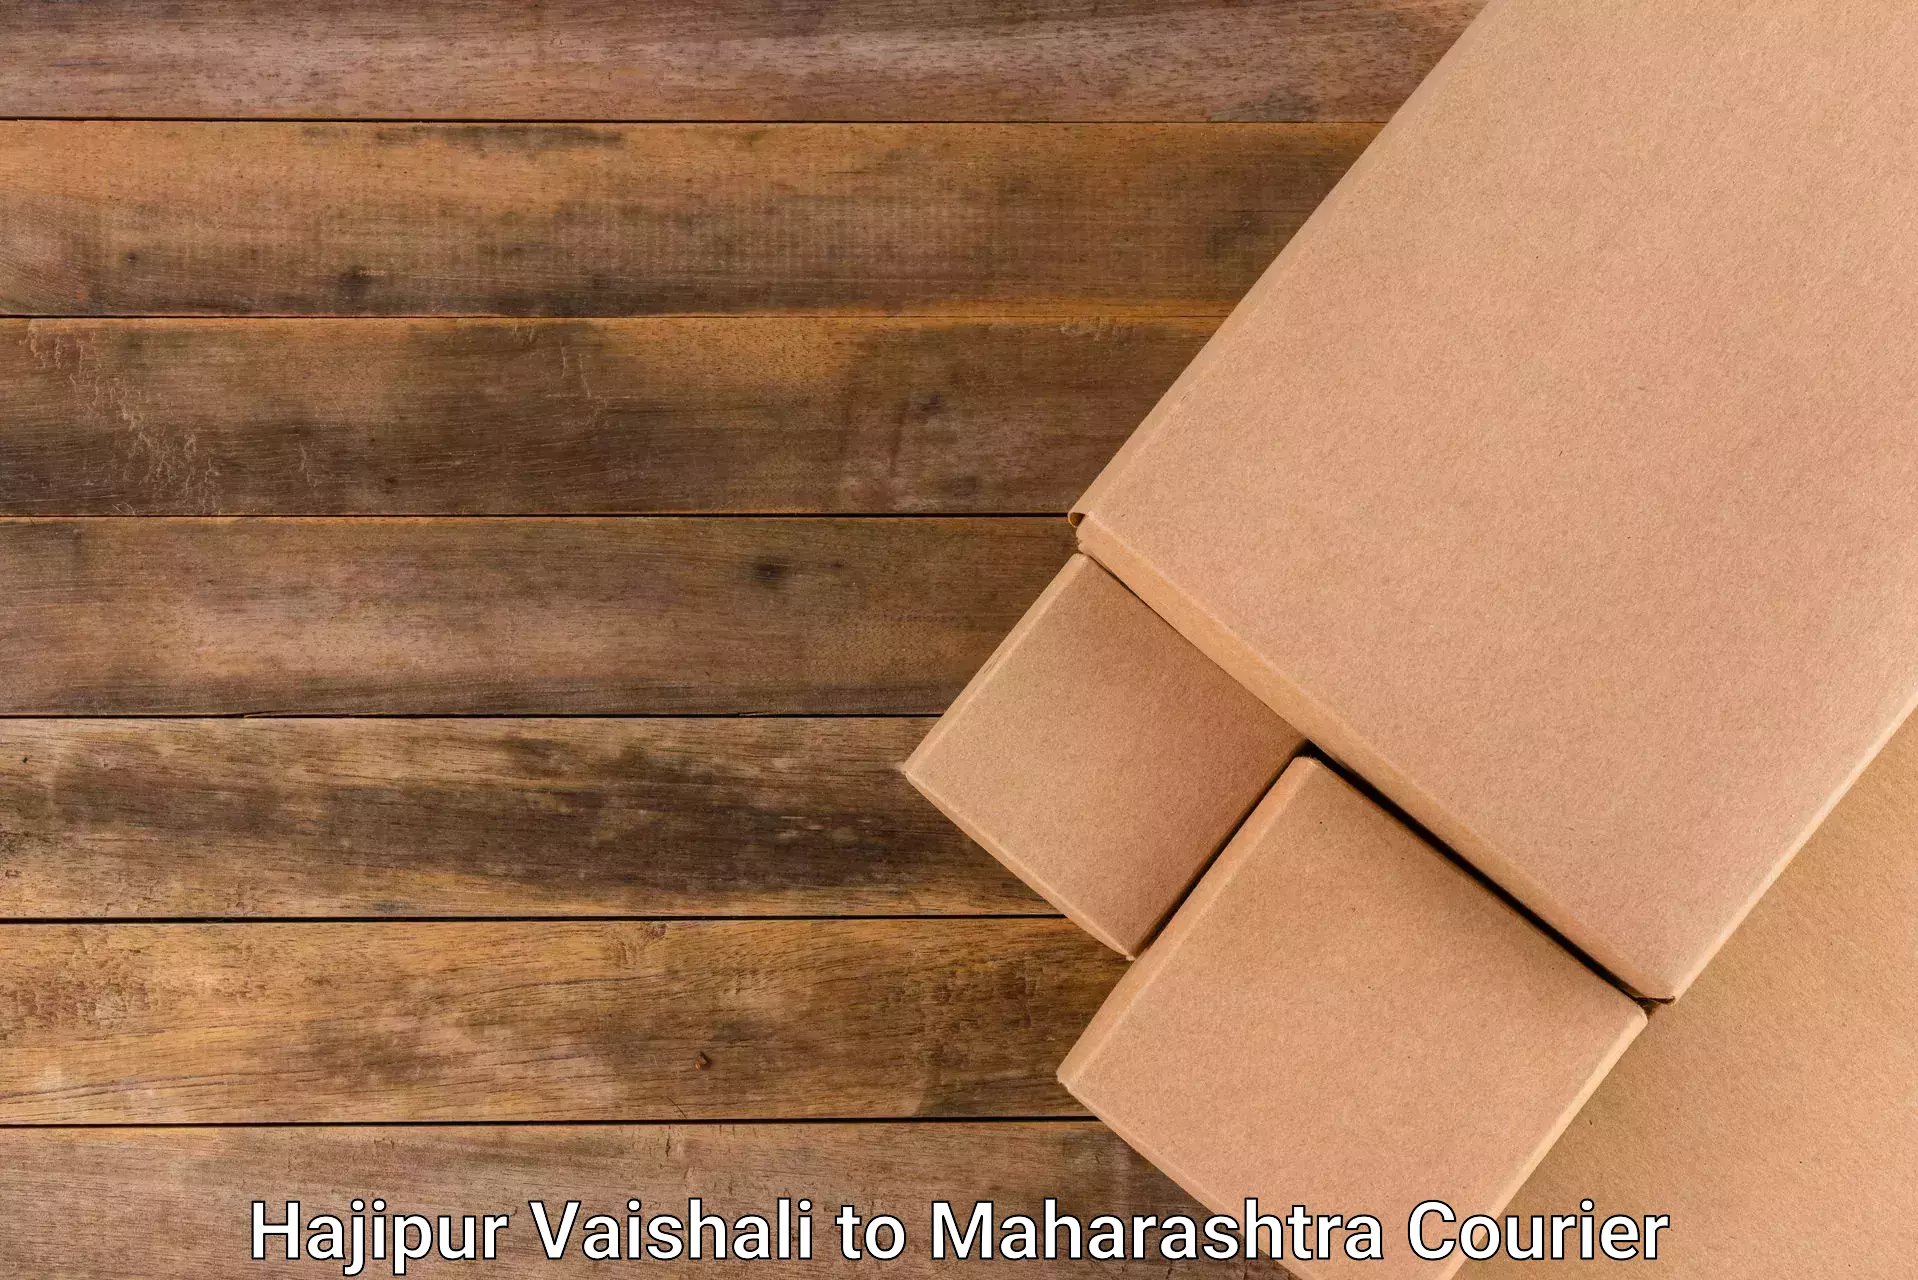 Express courier facilities Hajipur Vaishali to Lonavala